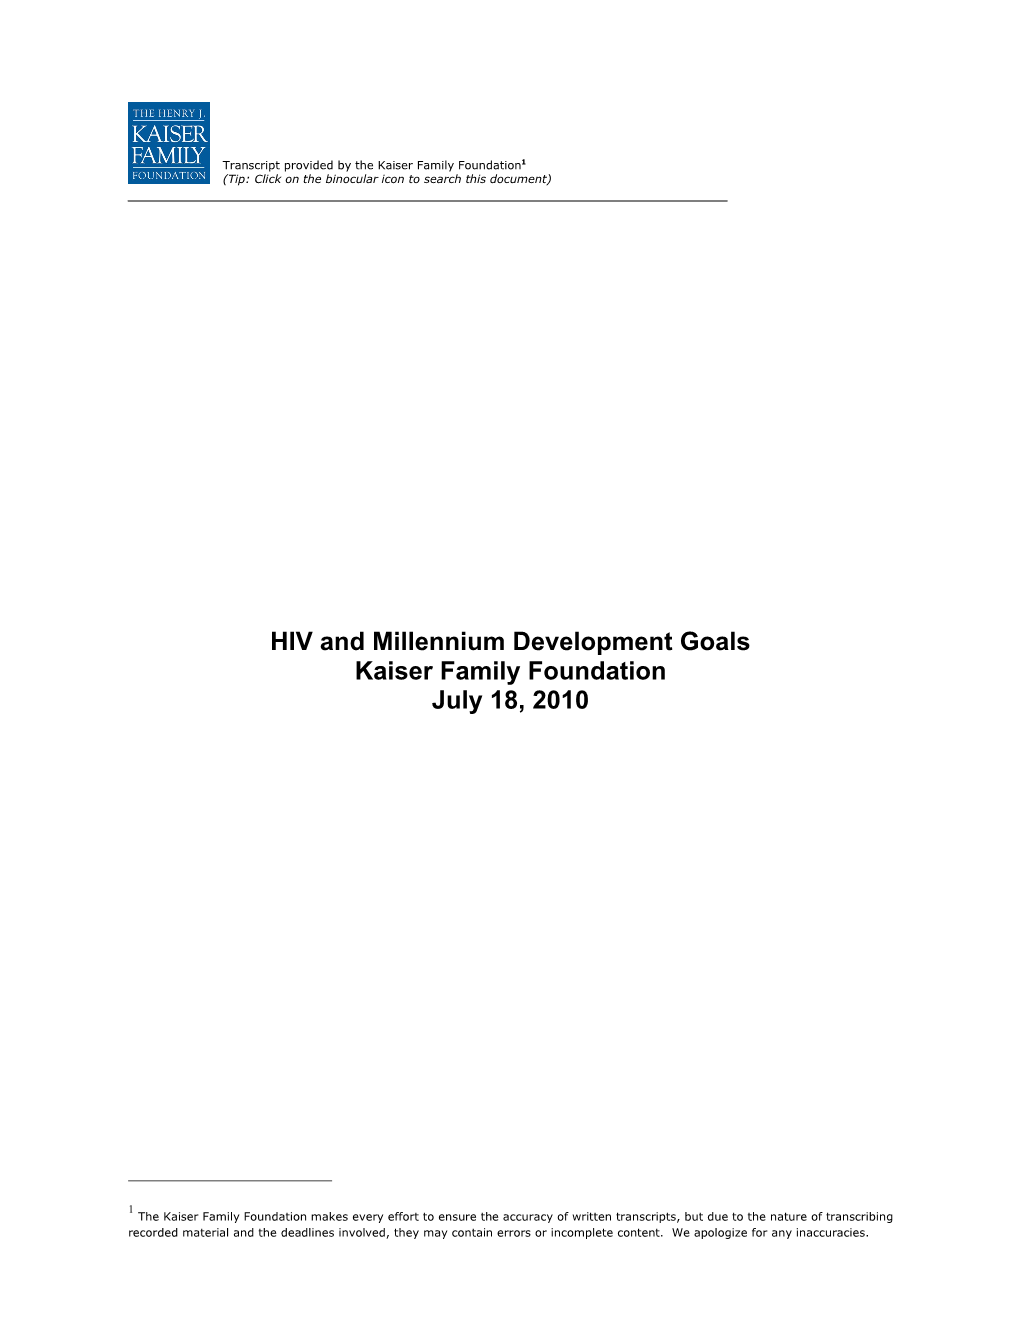 HIV and Millennium Development Goals Kaiser Family Foundation July 18, 2010